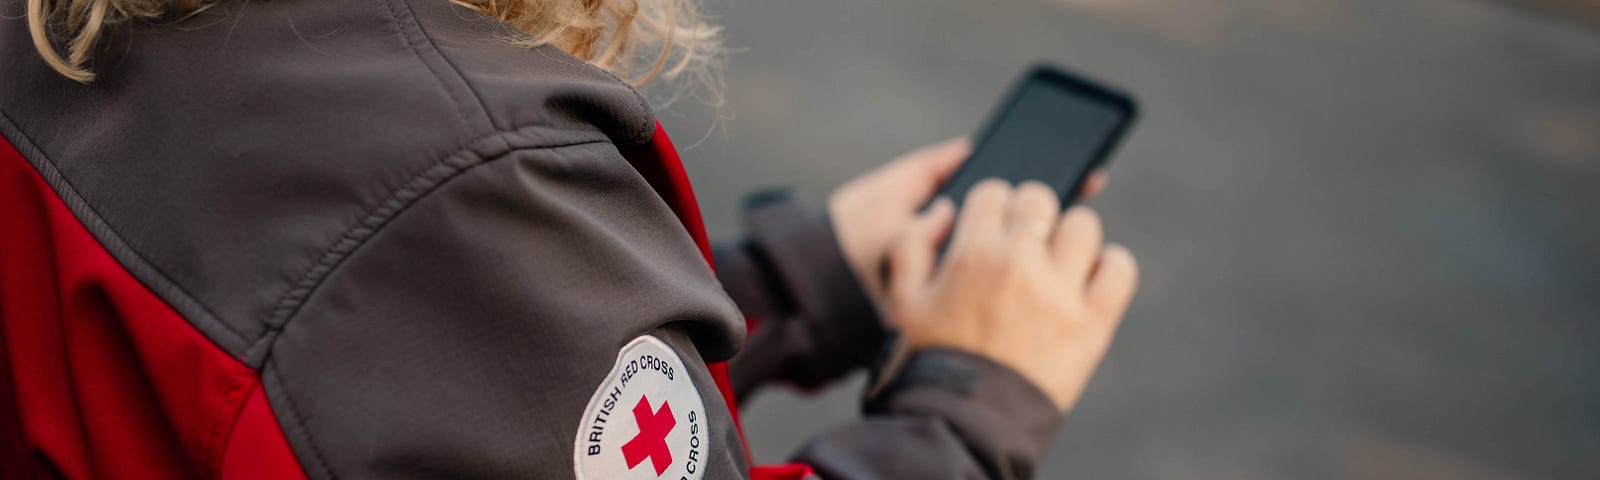 British Red Cross Volunteer checking their mobile phone